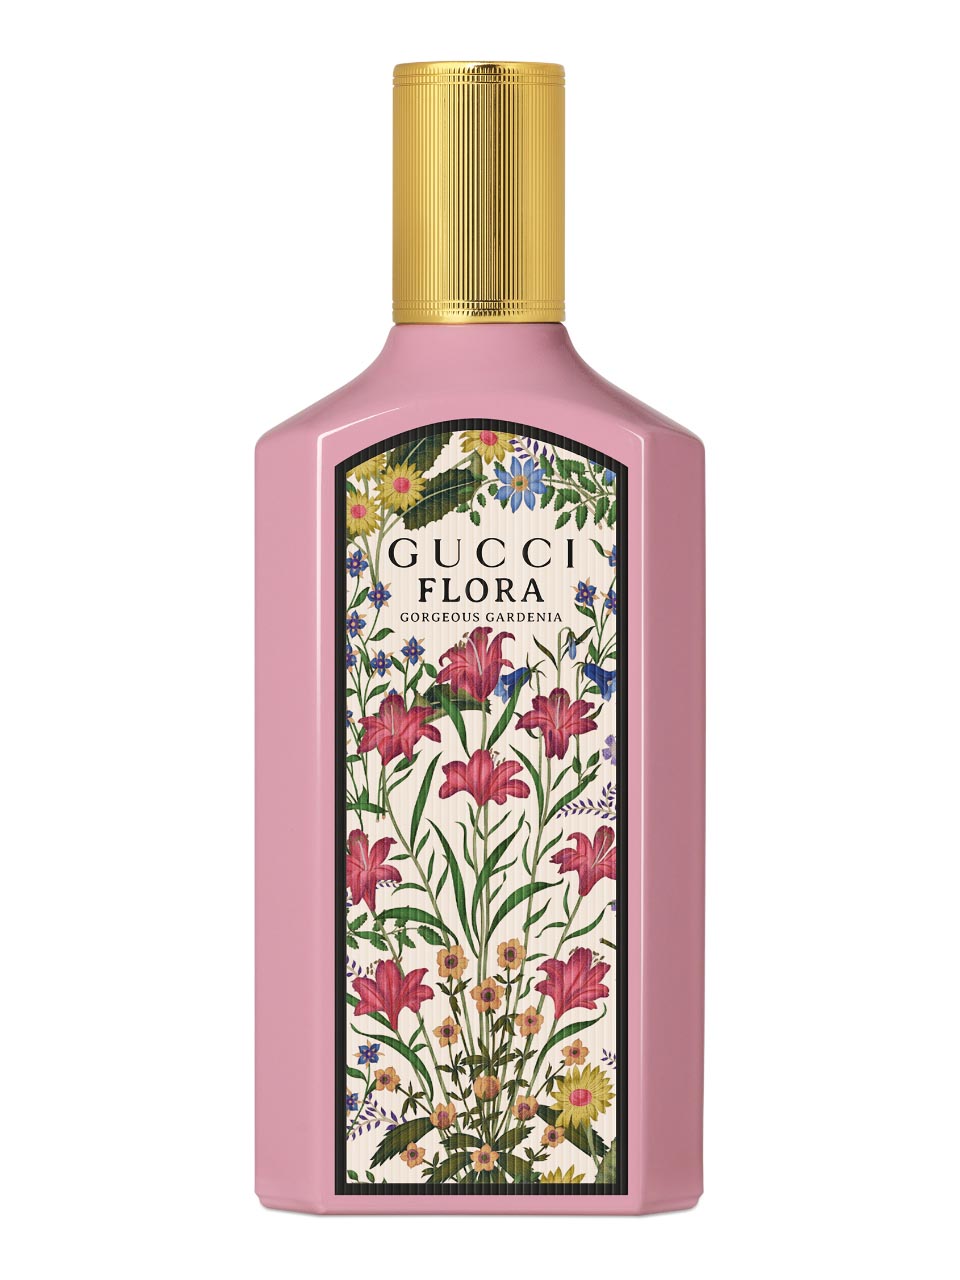 Gucci Flora Gorgeous Gardenia Eau de Parfum 100 ml null - onesize - 1